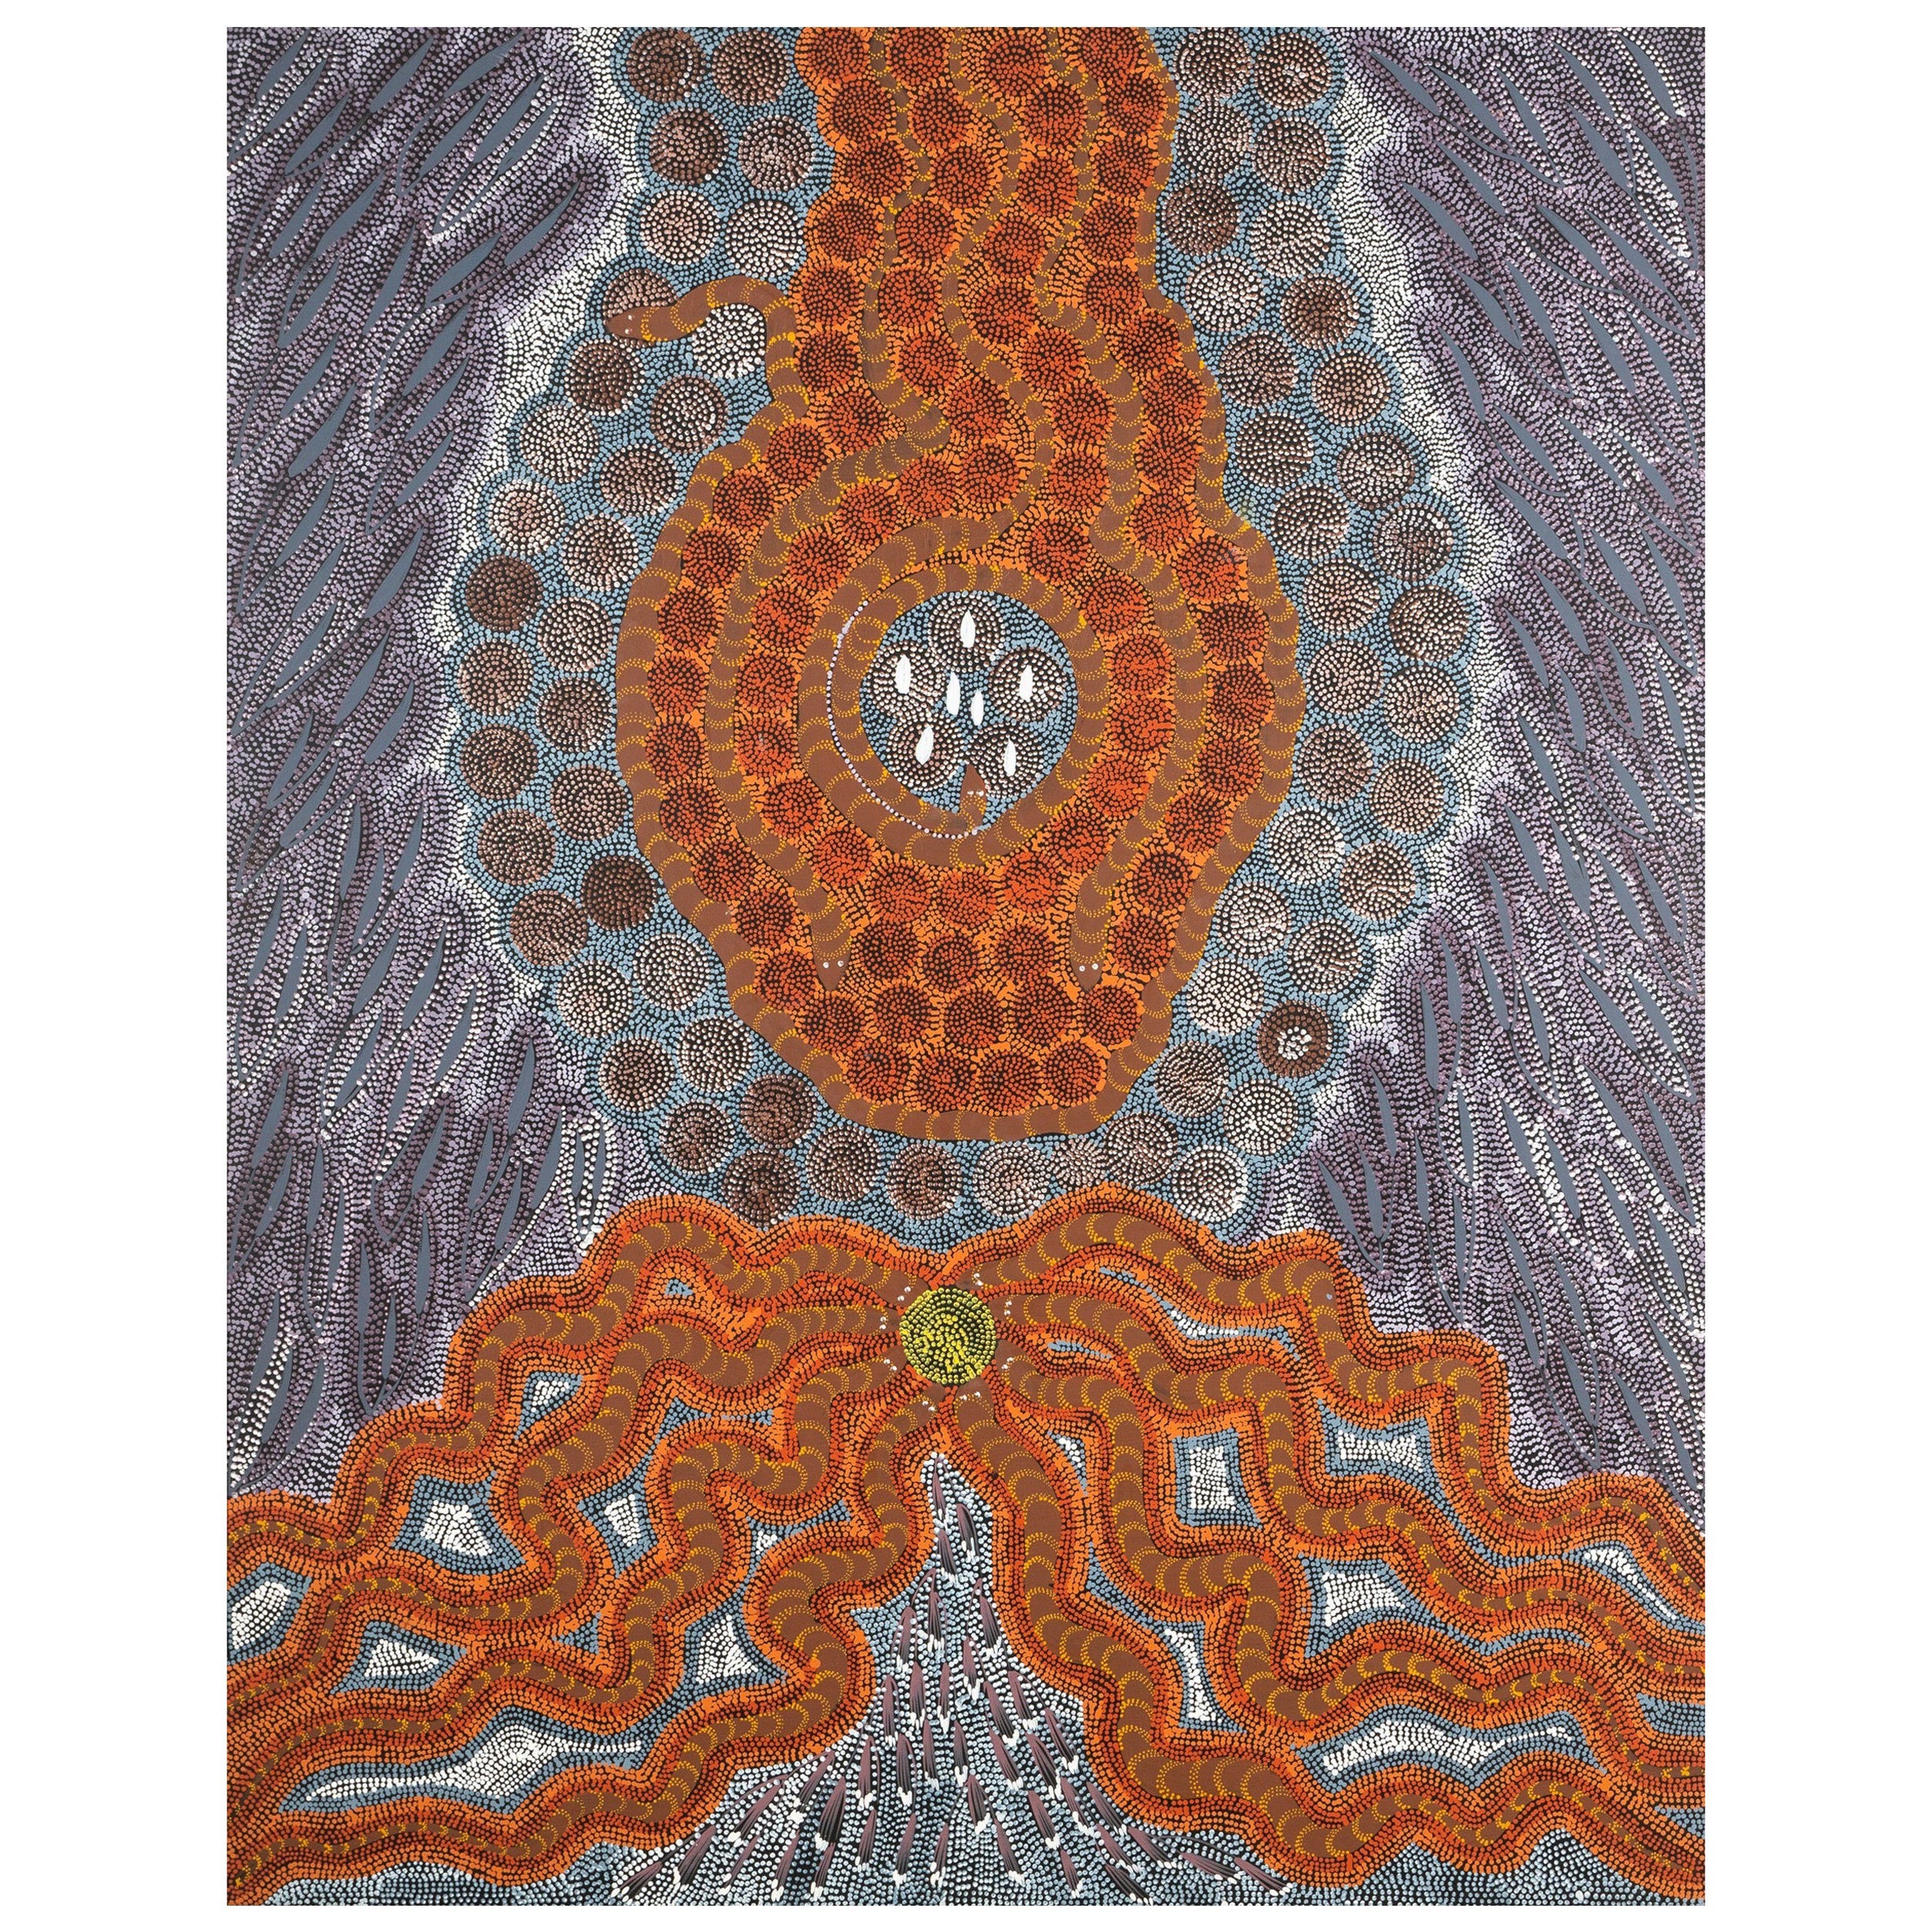 Australian Aboriginal Art Janet Forrester Ngala Painting Snake & Milky Way Dream